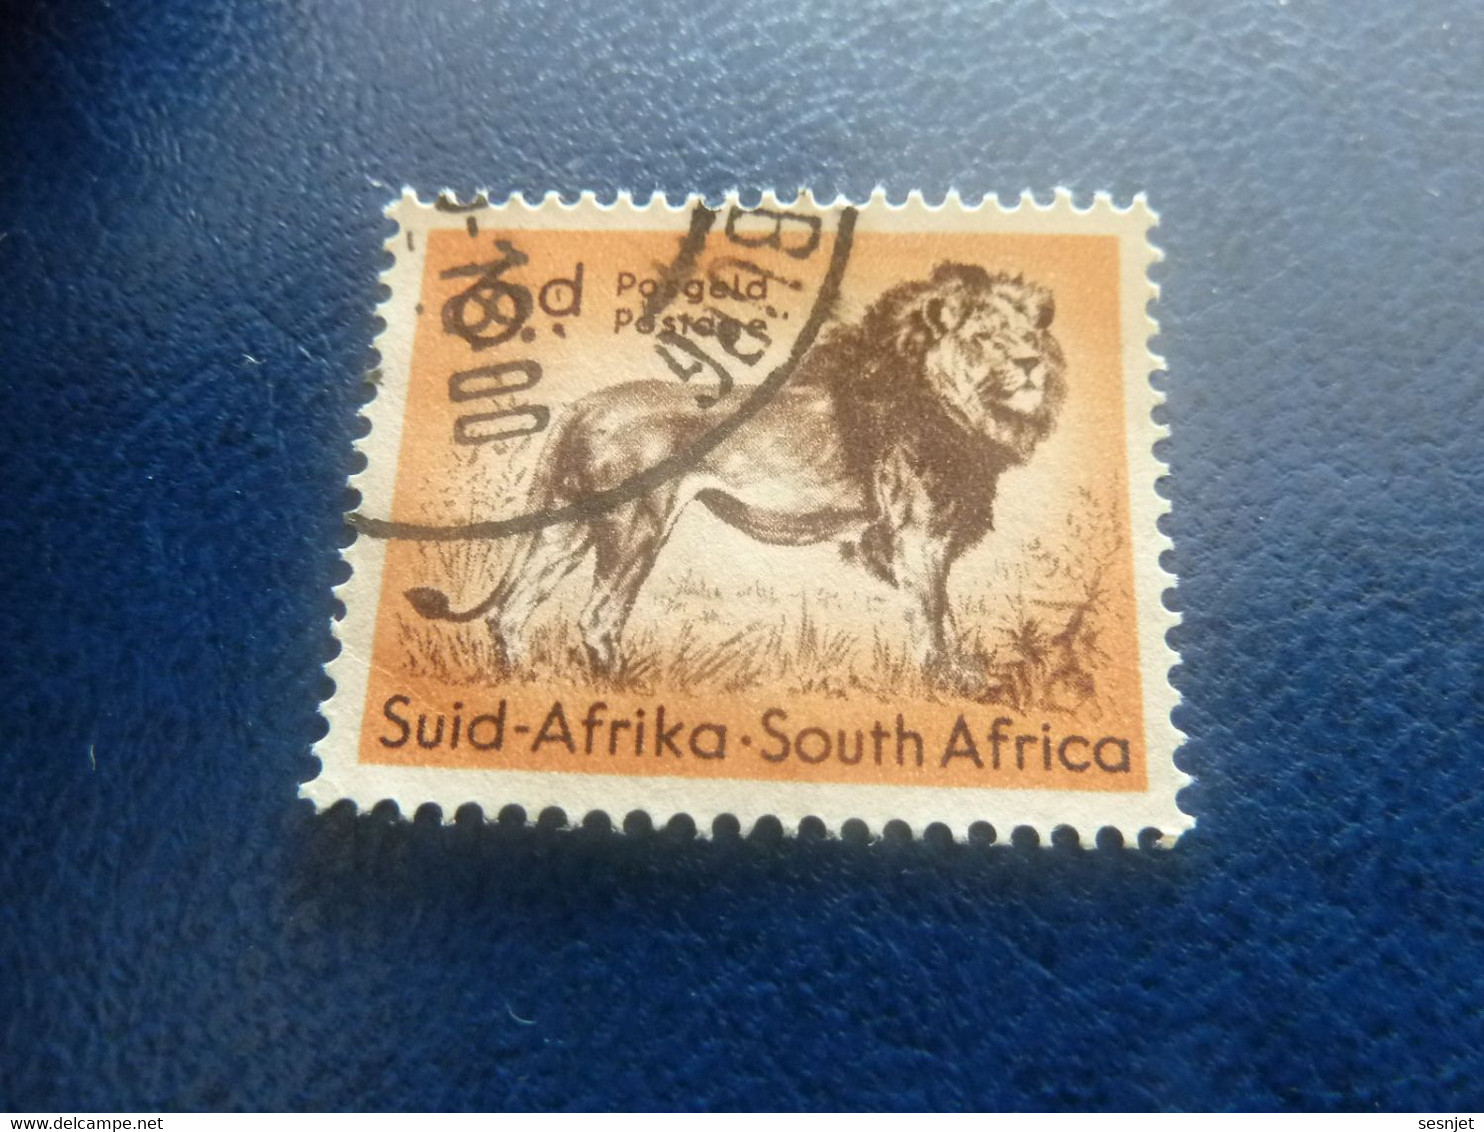 Suid-Africa - South Africa - Lion - 6 D. - Postage - Multicolore - Oblitéré - Année 1986 - - Usati